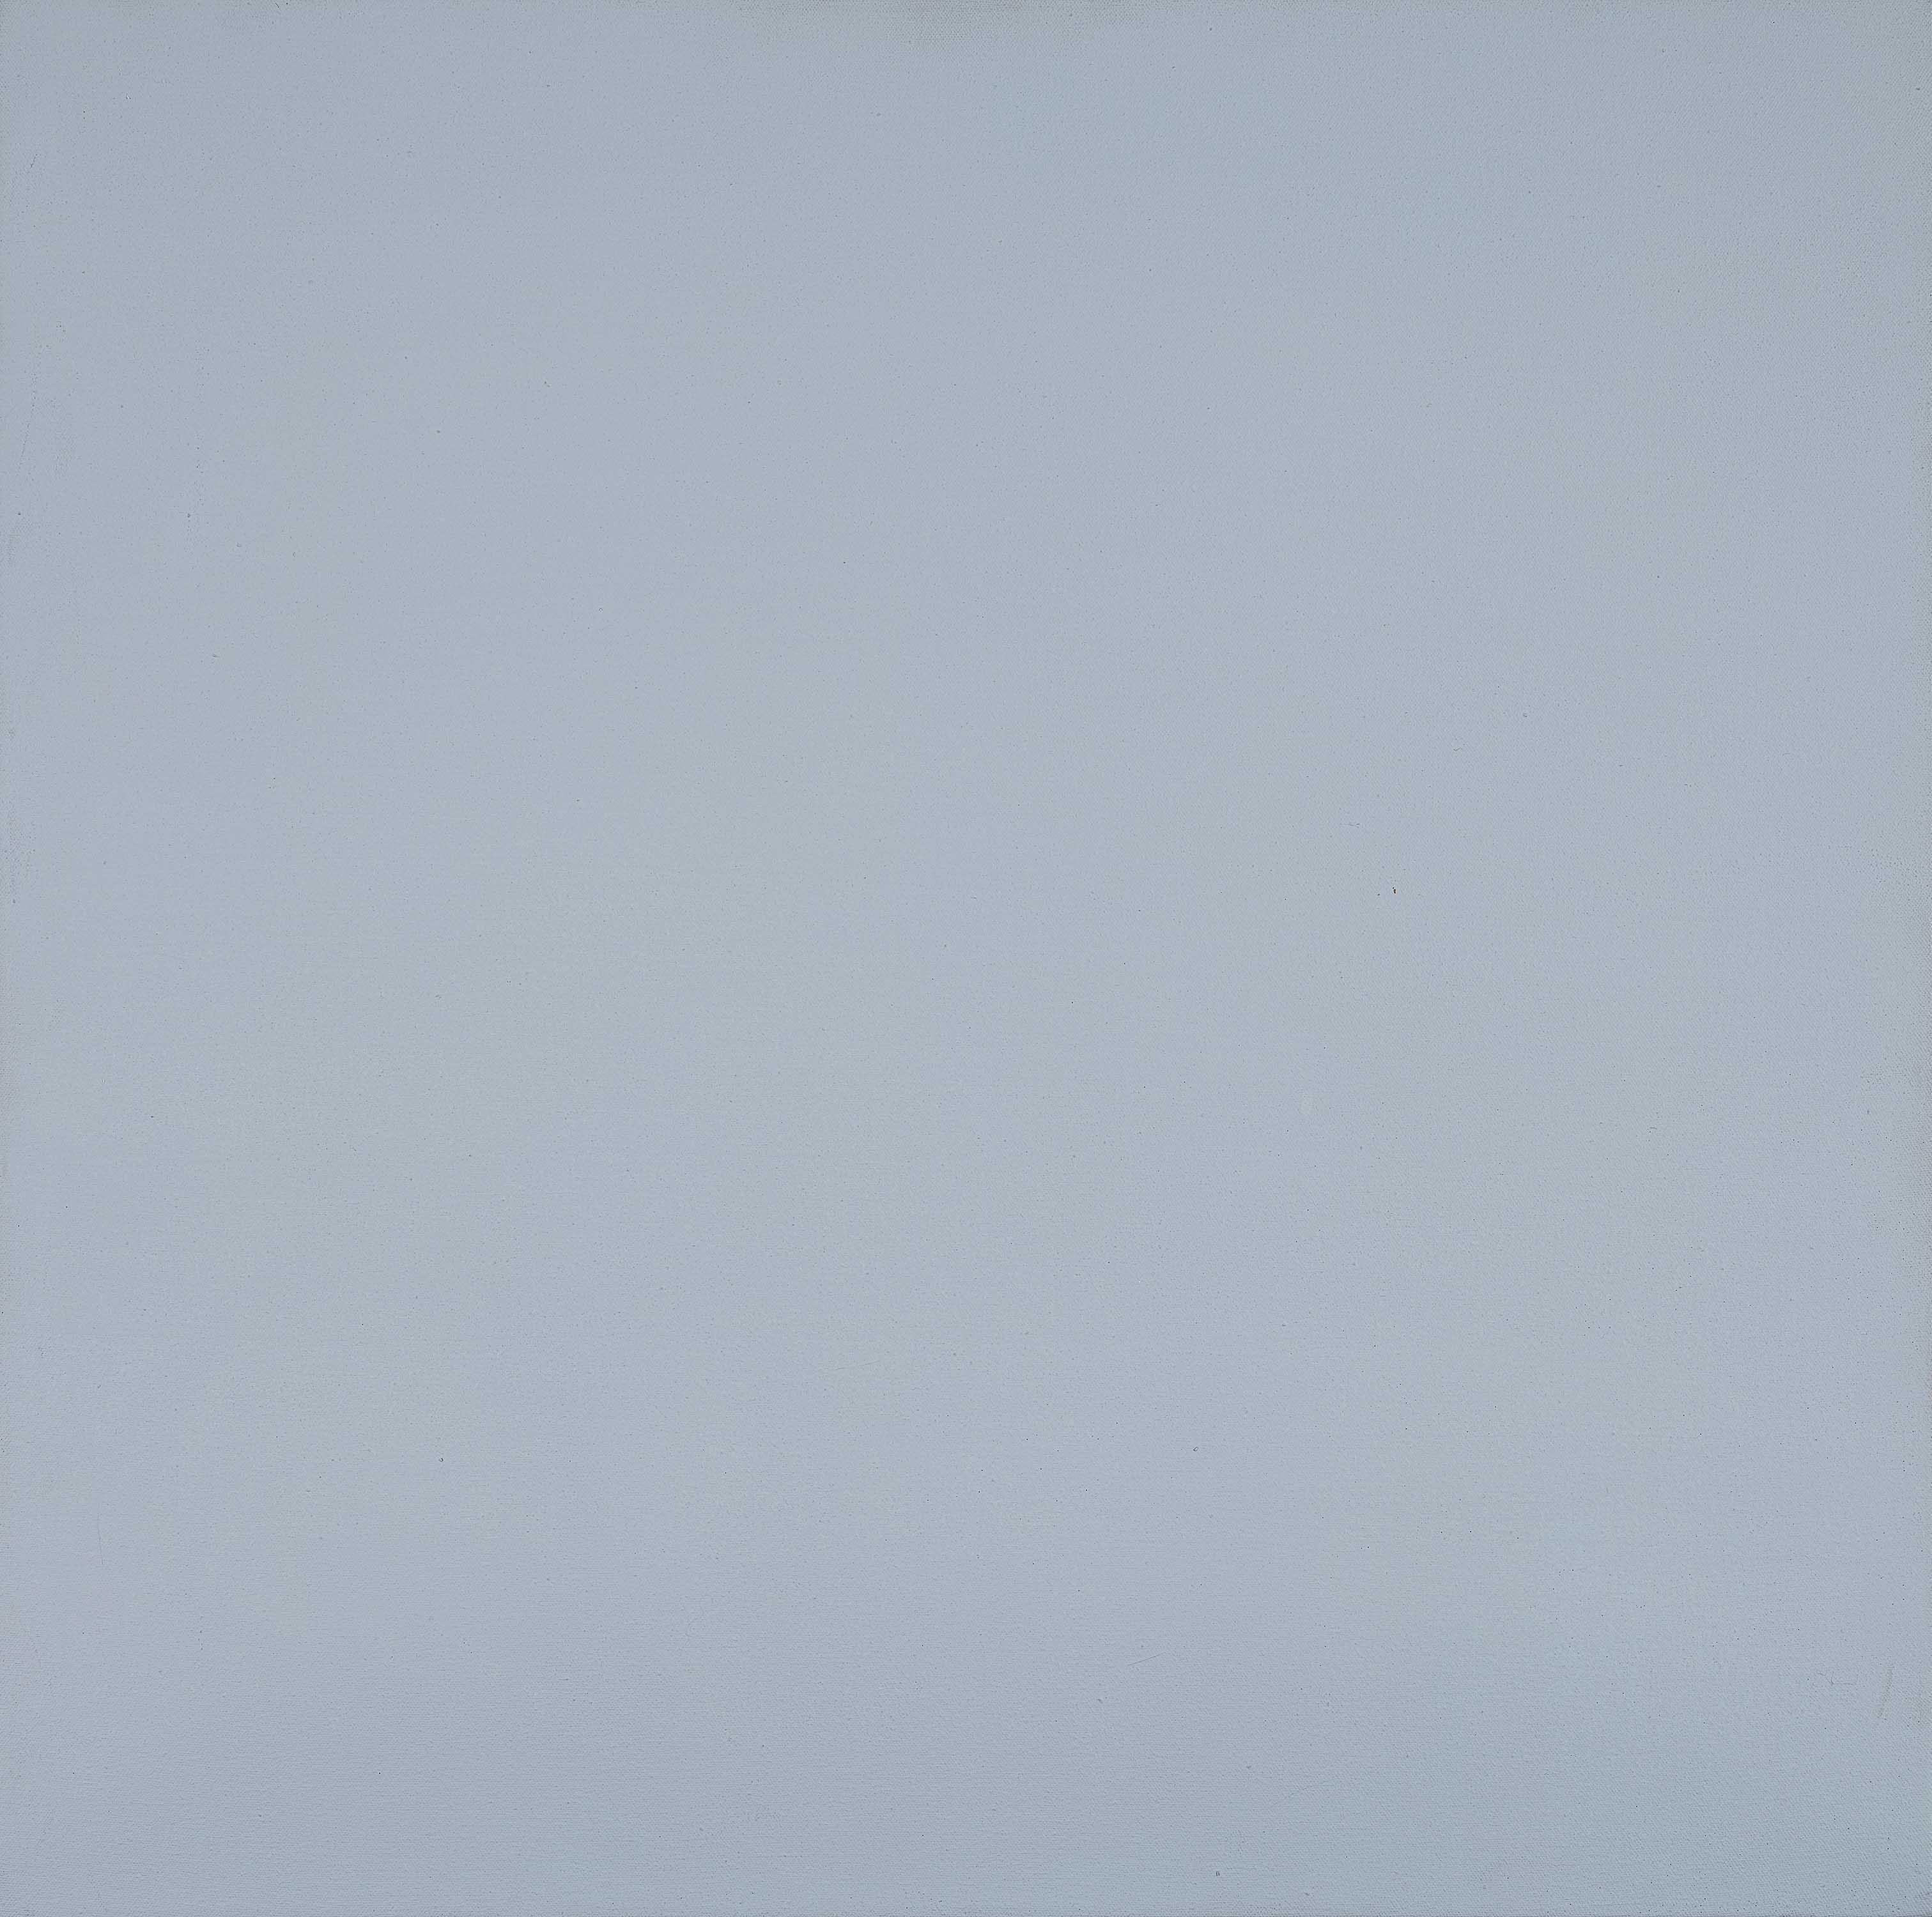 Olivier Mosset - Ohne Titel Hellblau, 73012-45, Van Ham Kunstauktionen